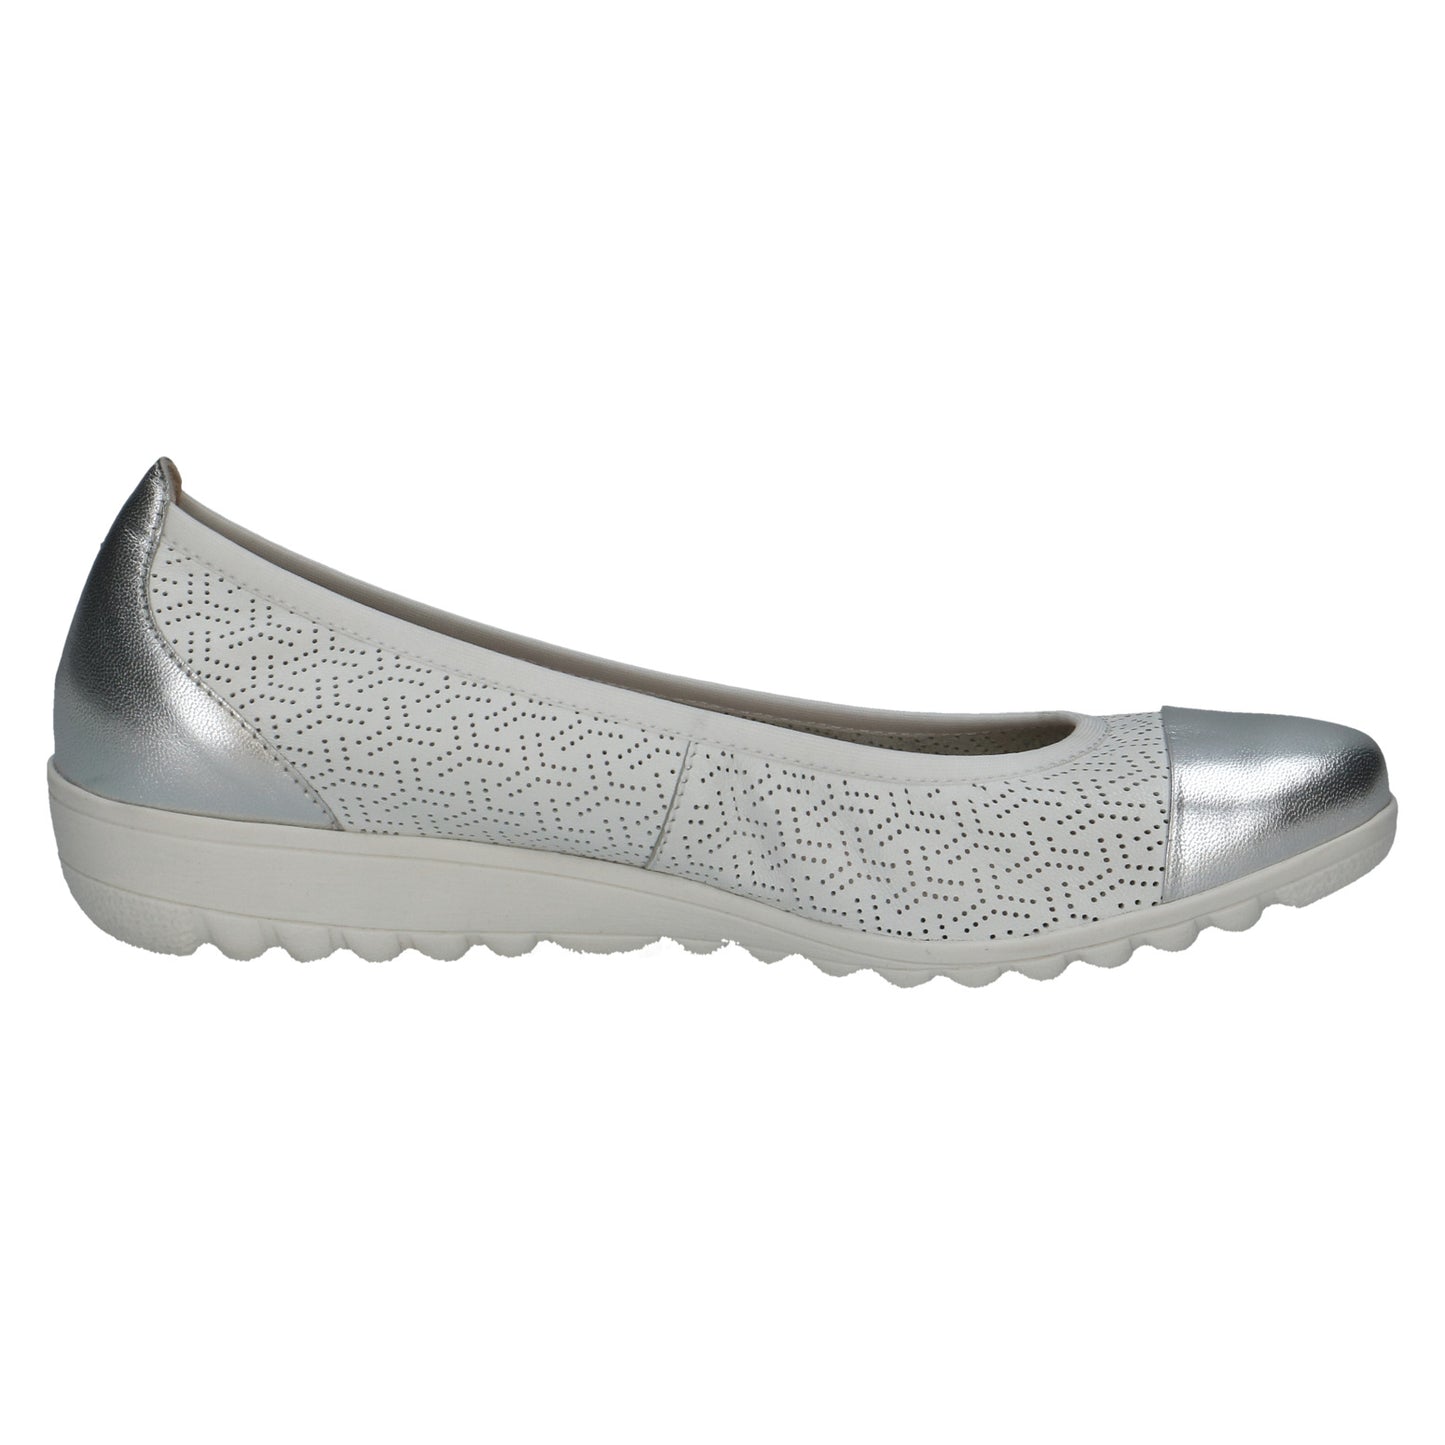 Caprice - Ladies Shoes Pumps White, Silver (1941)